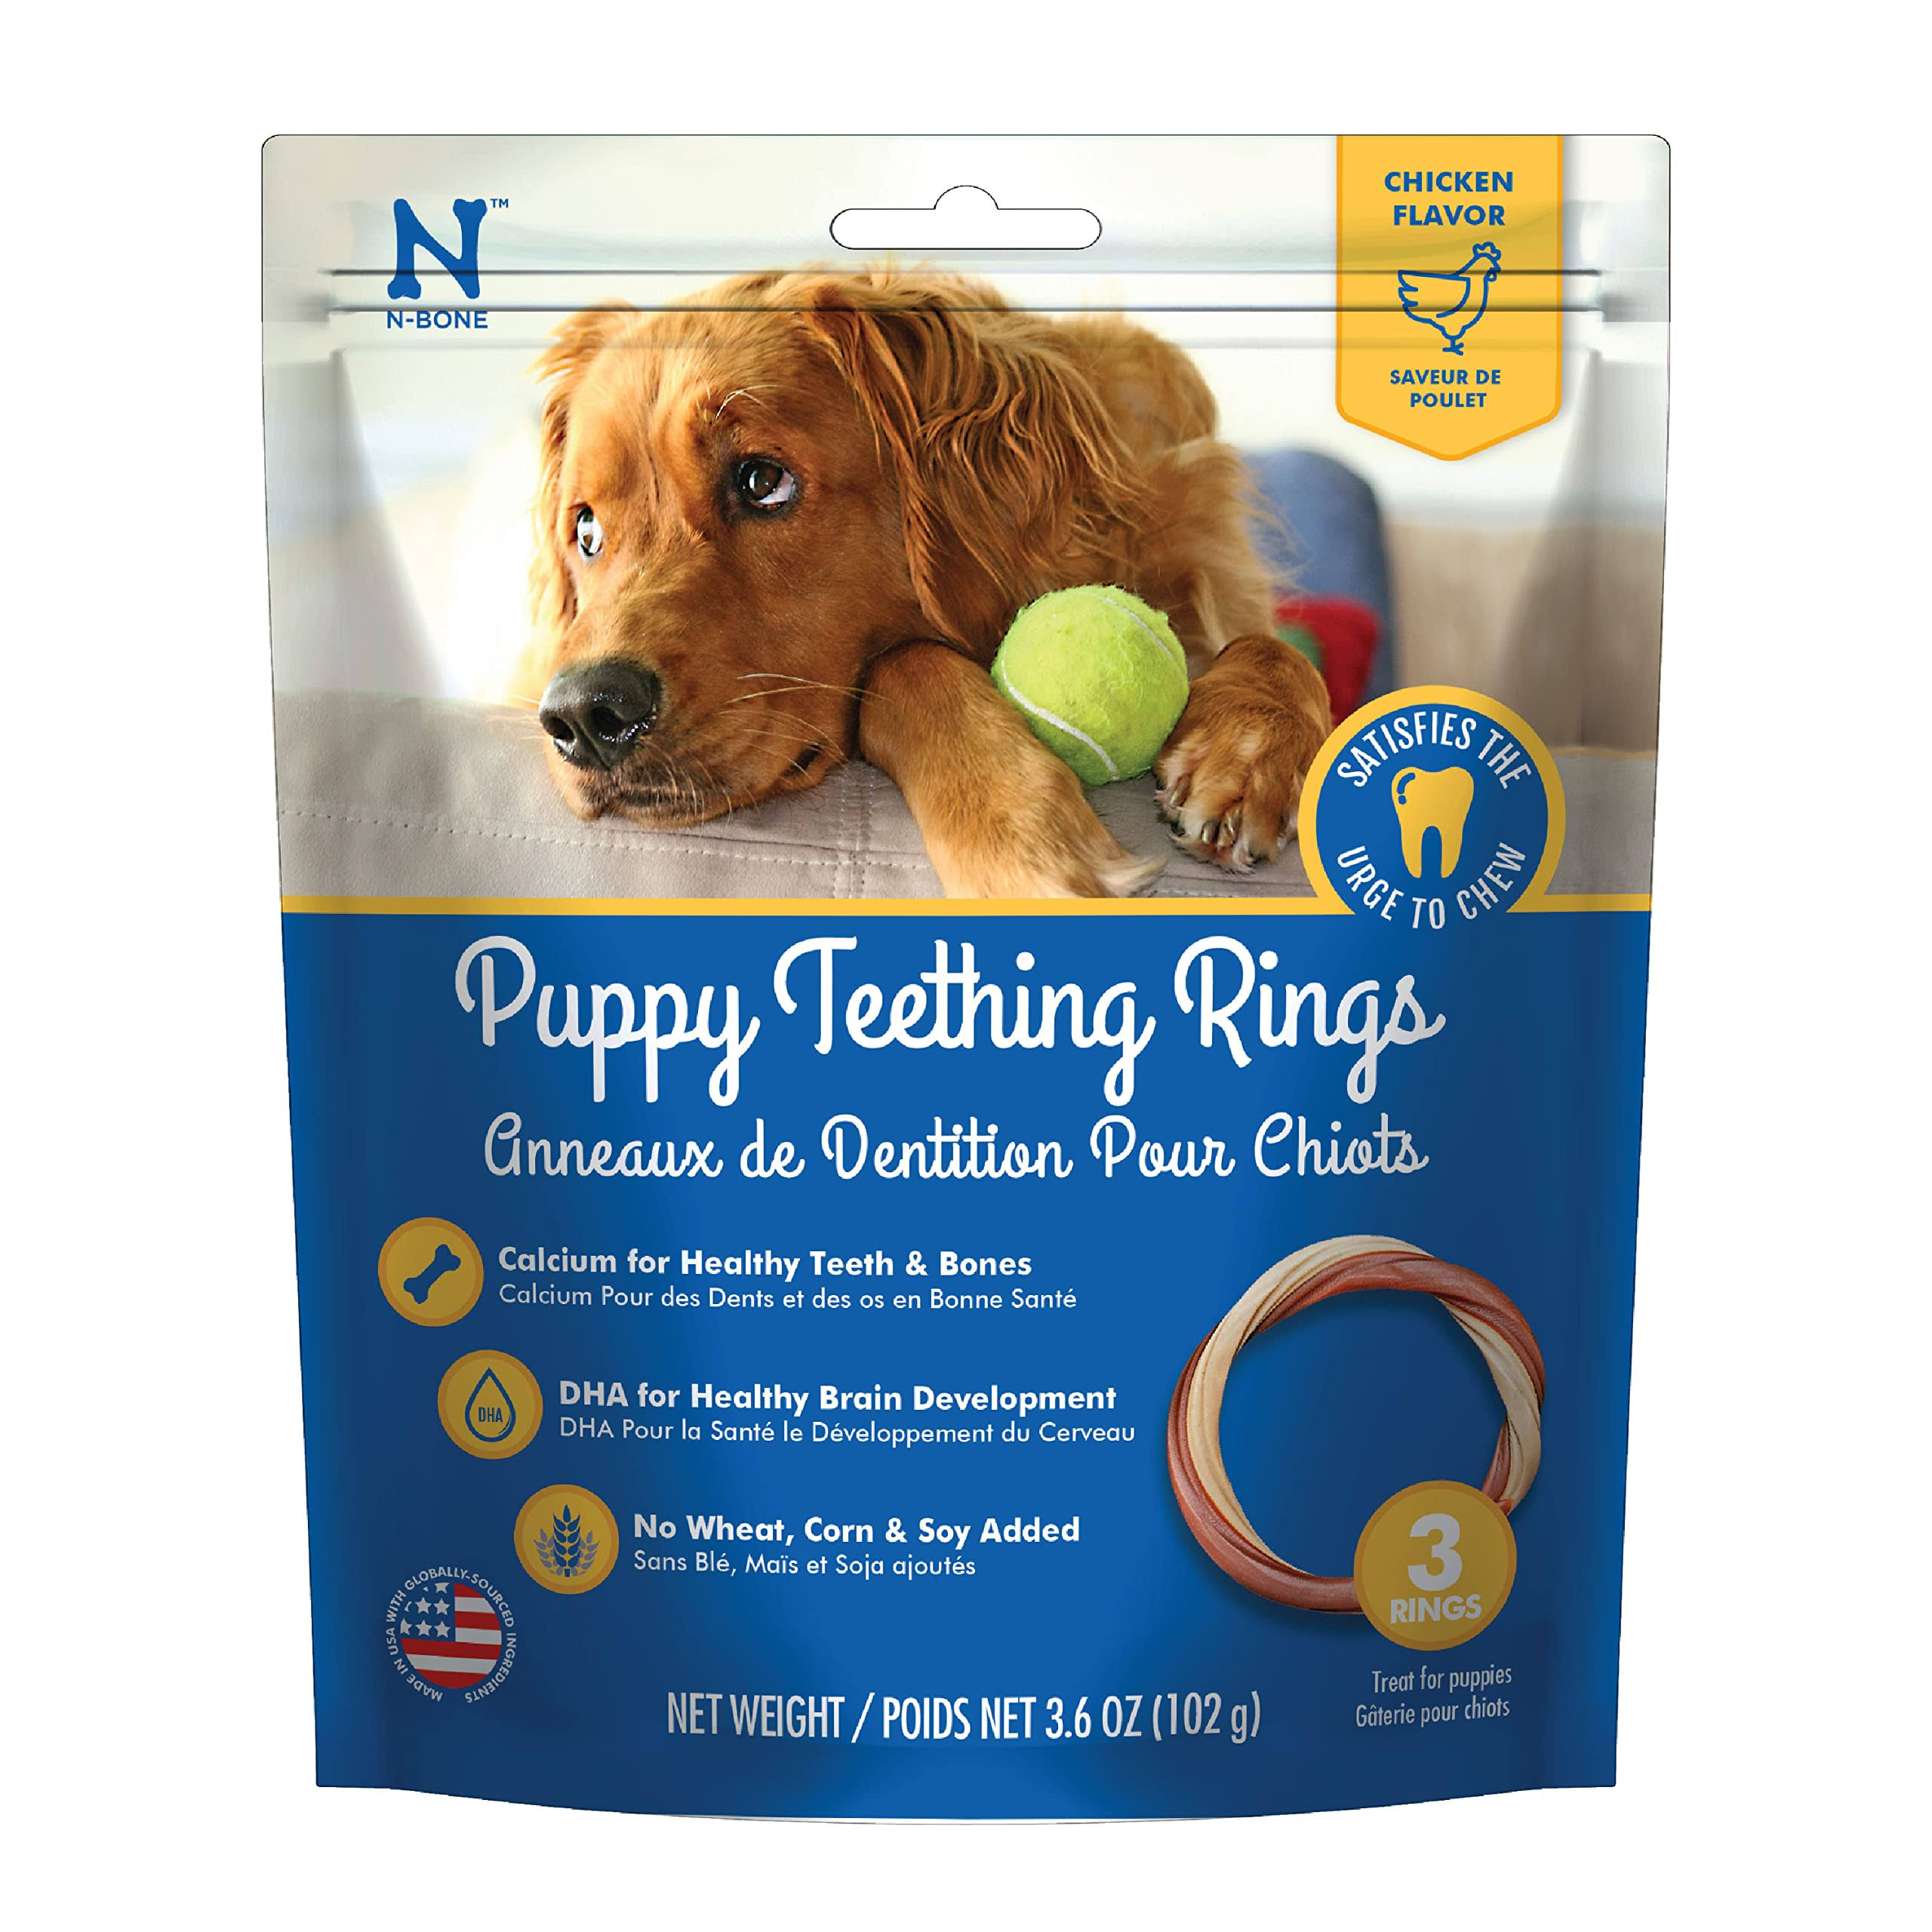 N-Bone Puppy Teething Ring Dog Chew - Chicken Flavor, 3 Pack